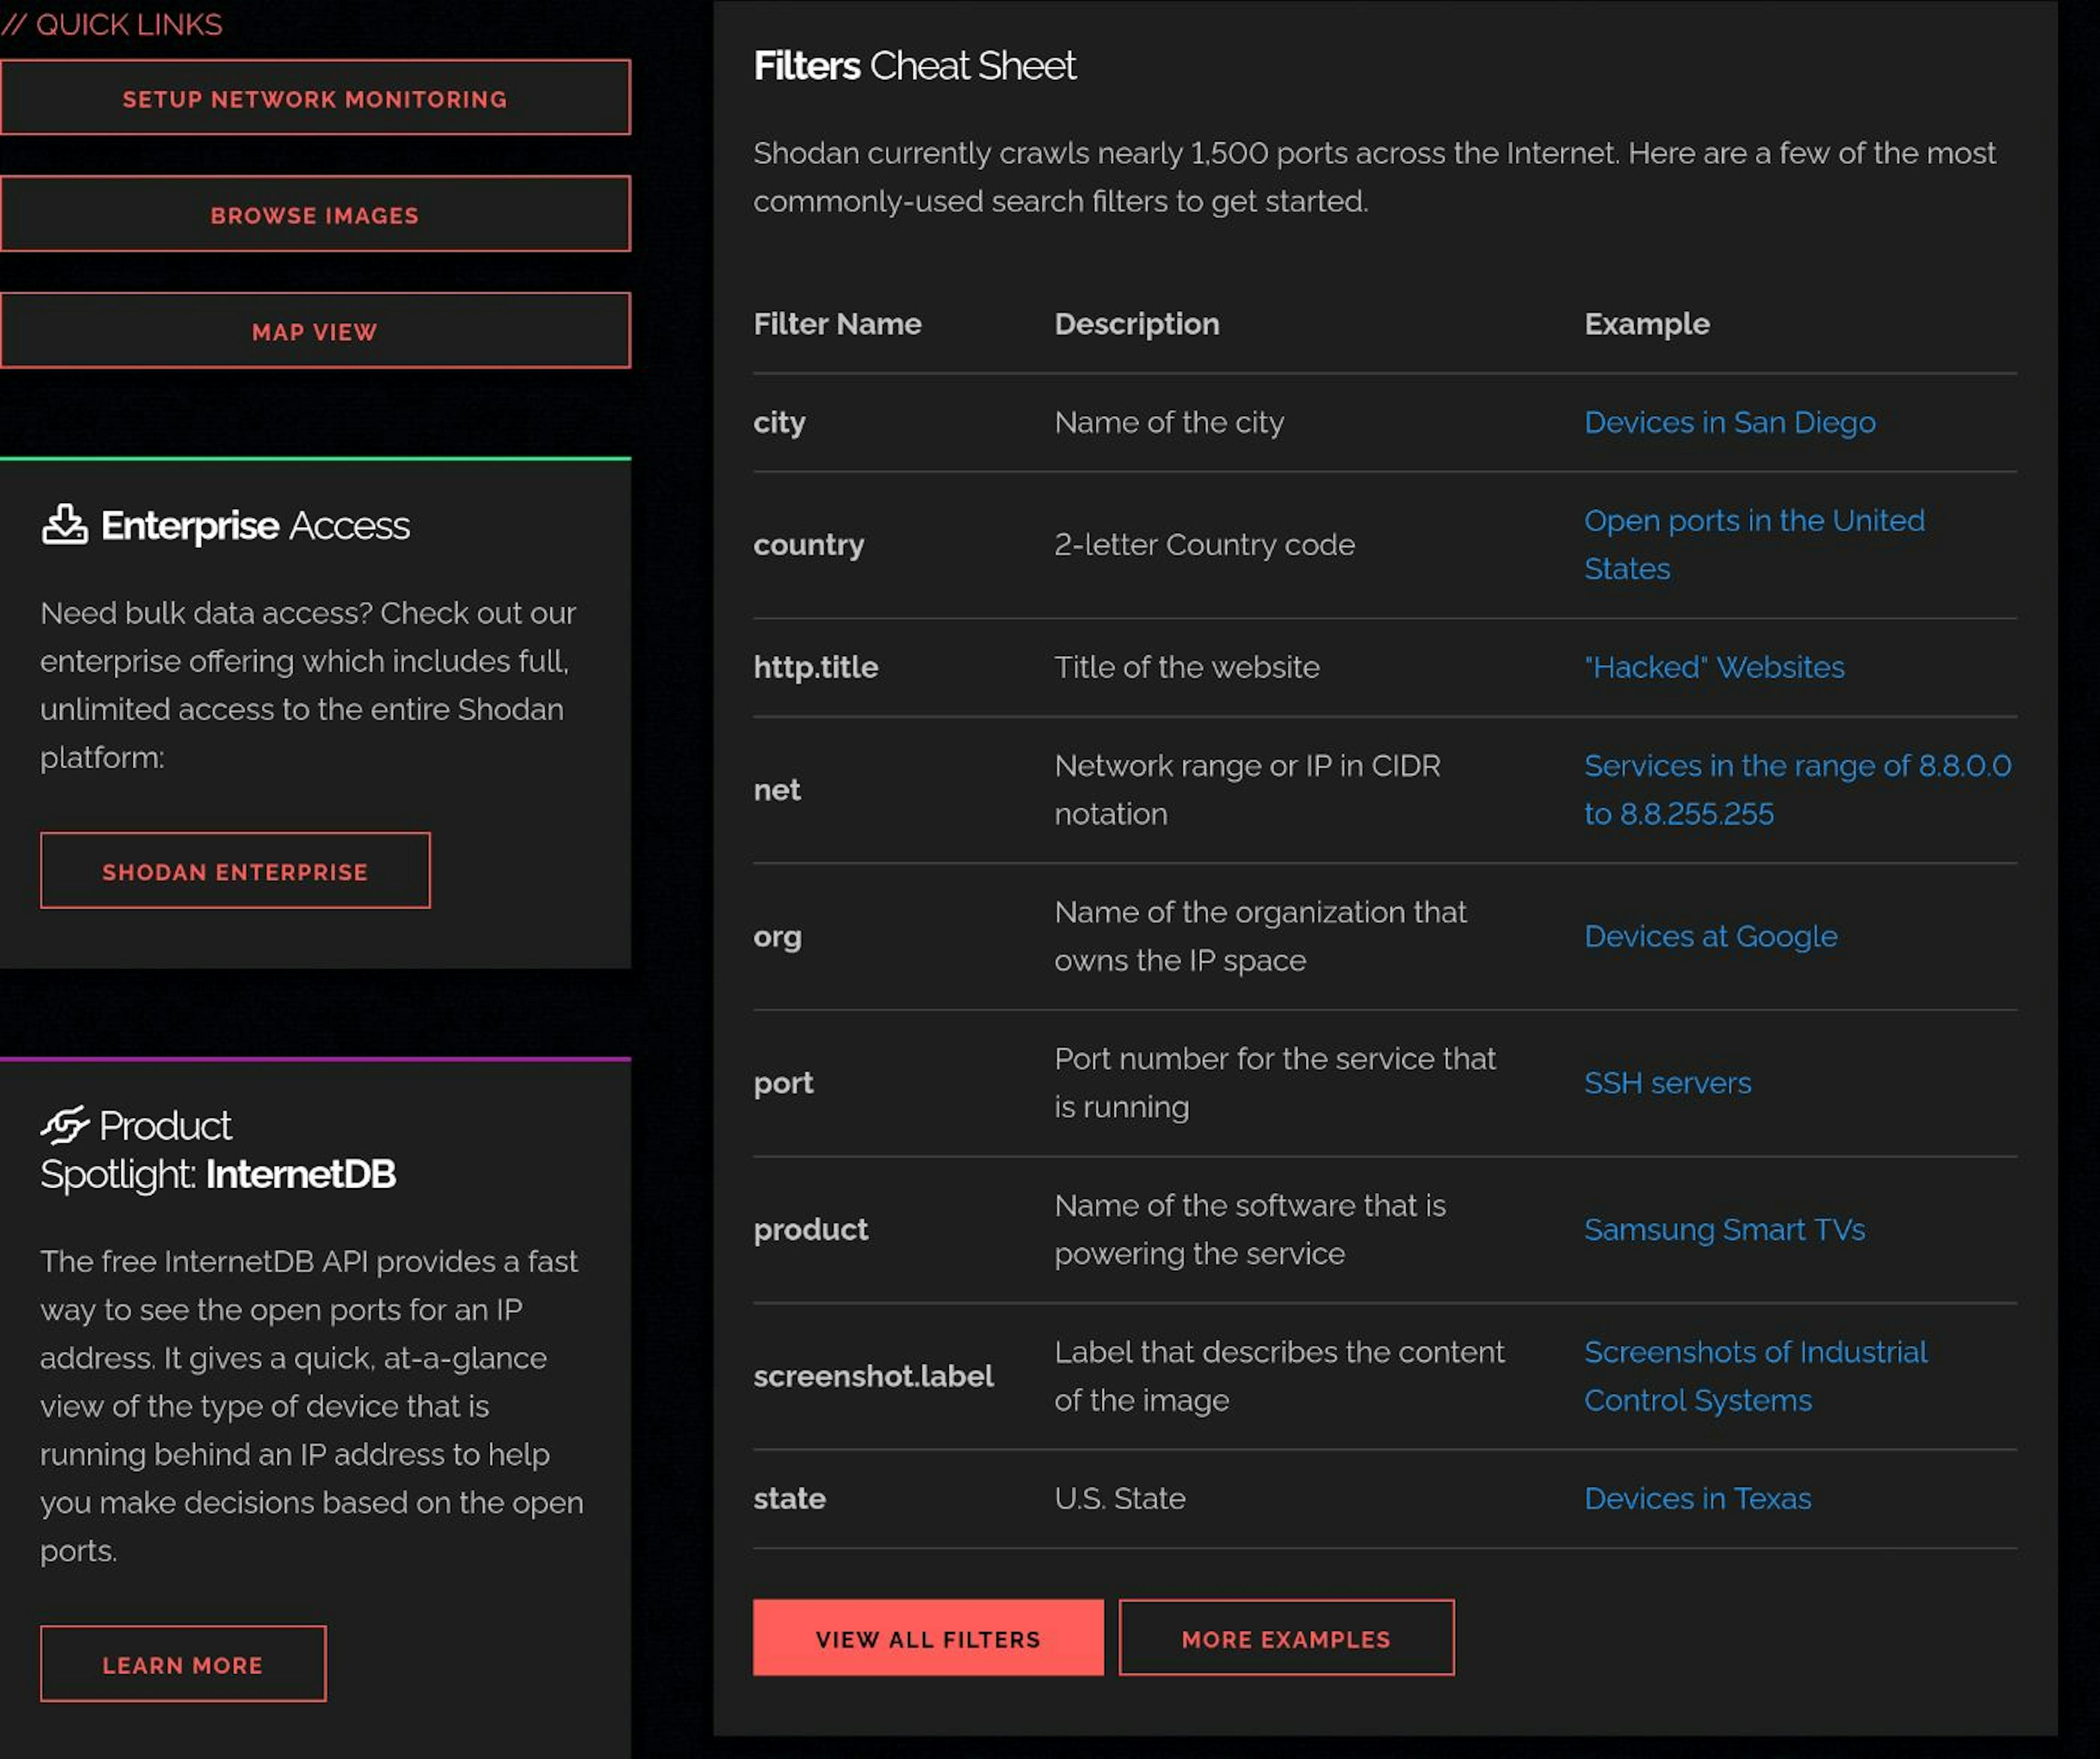 Filters for days - Shodan 门户网站显示搜索标签。